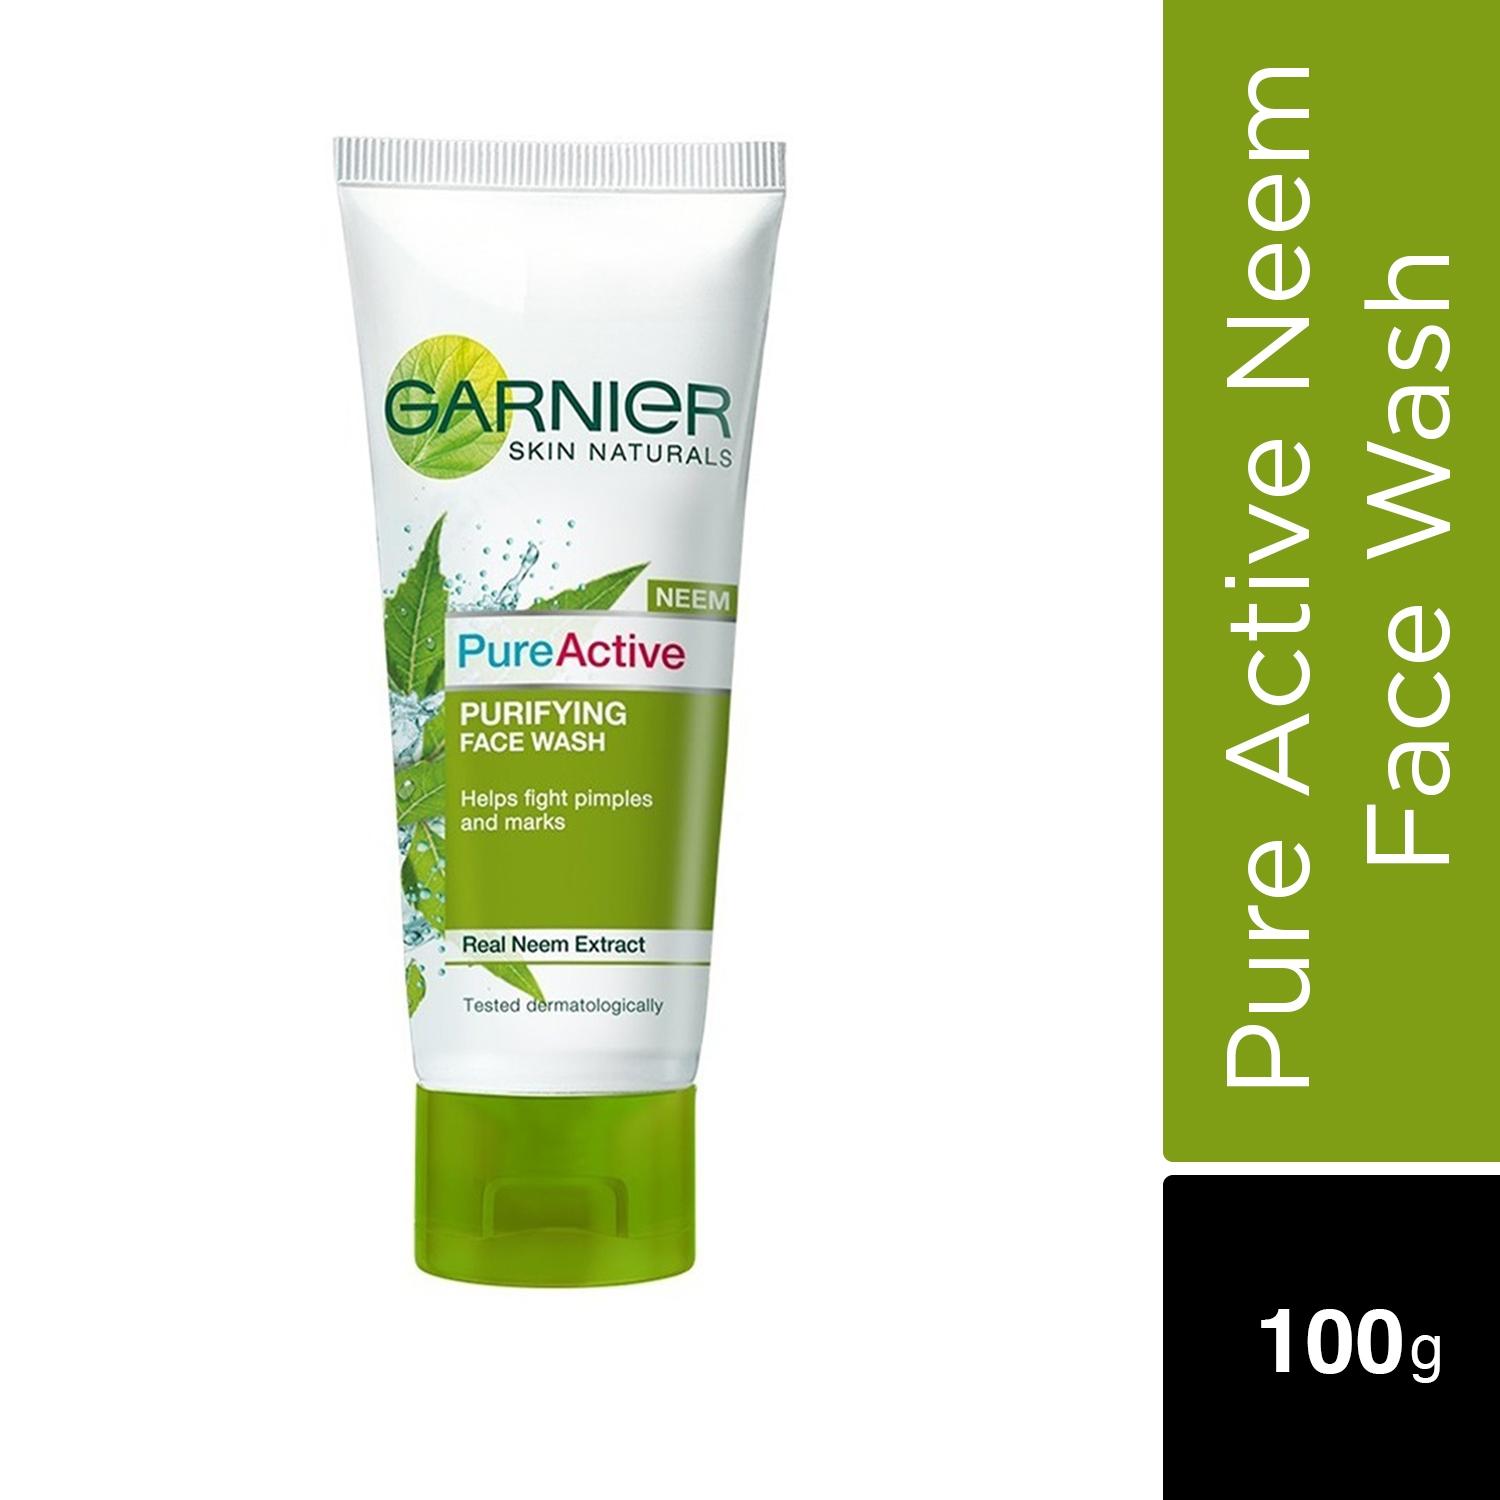 garnier skin naturals pure active neem face wash (100g)